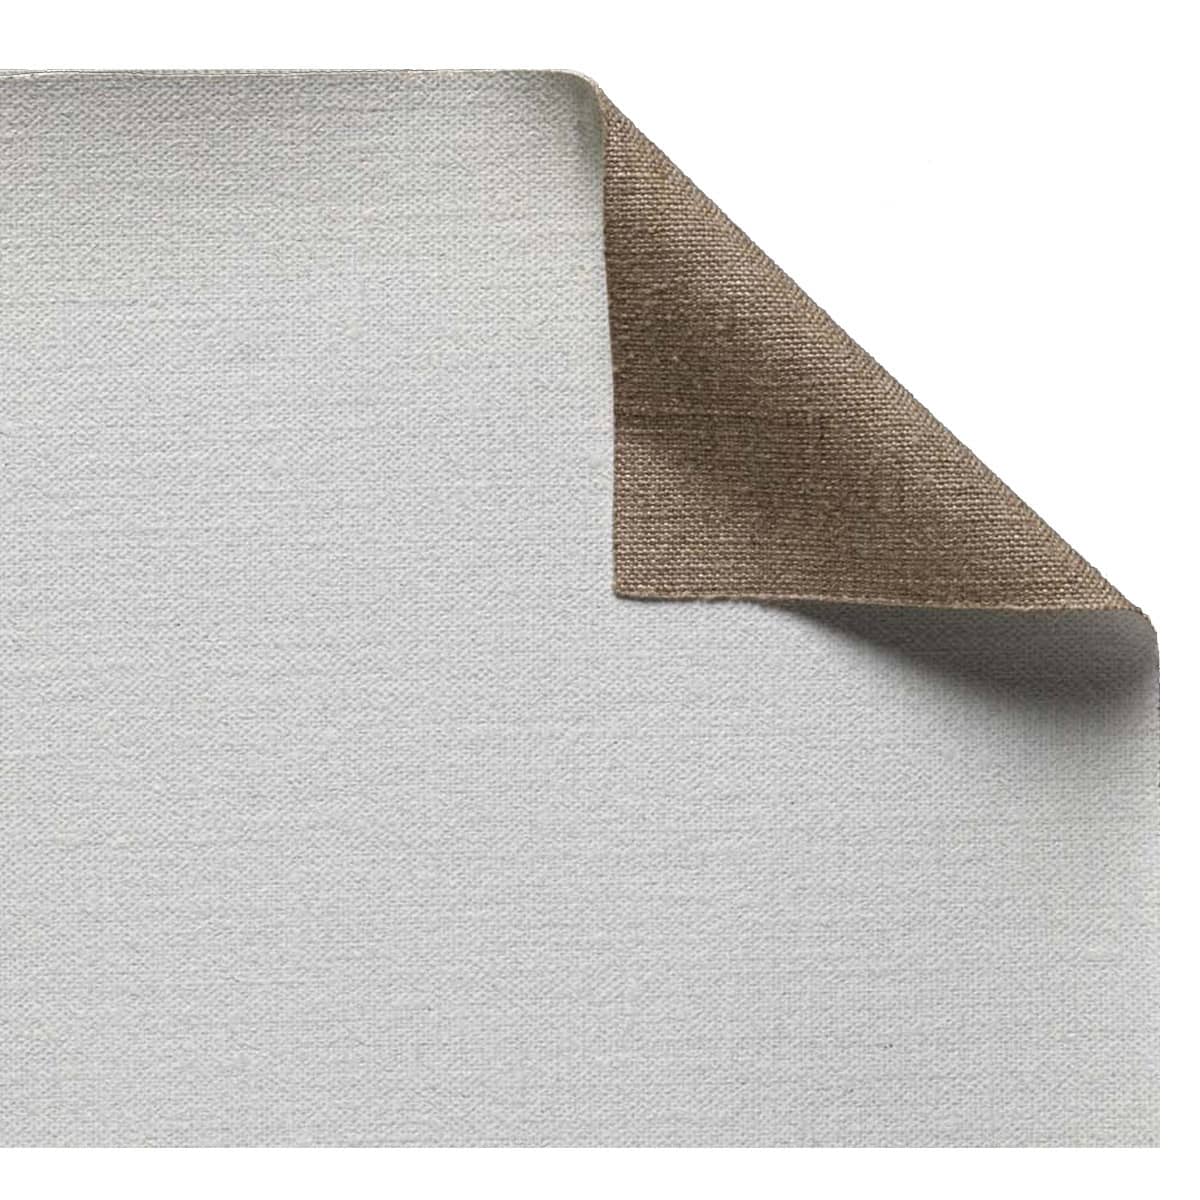 Claessens Linen #15 Double Oil Primed Medium Texture Roll